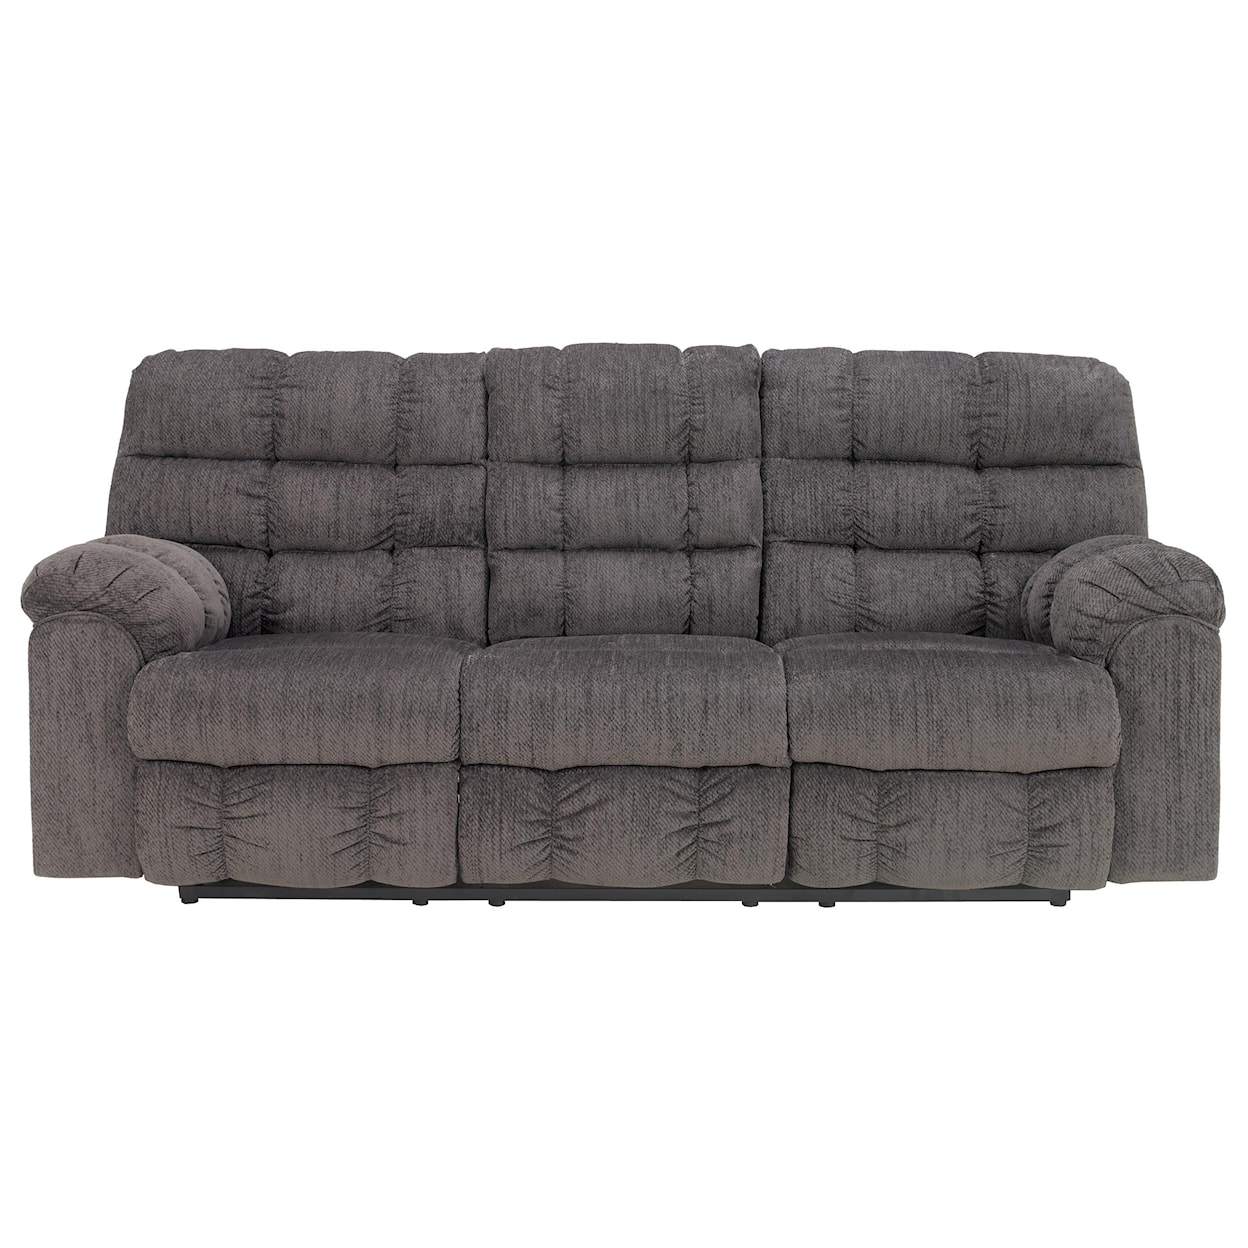 Ashley Furniture Signature Design Acieona - Slate Reclining Sofa with Drop Down Table